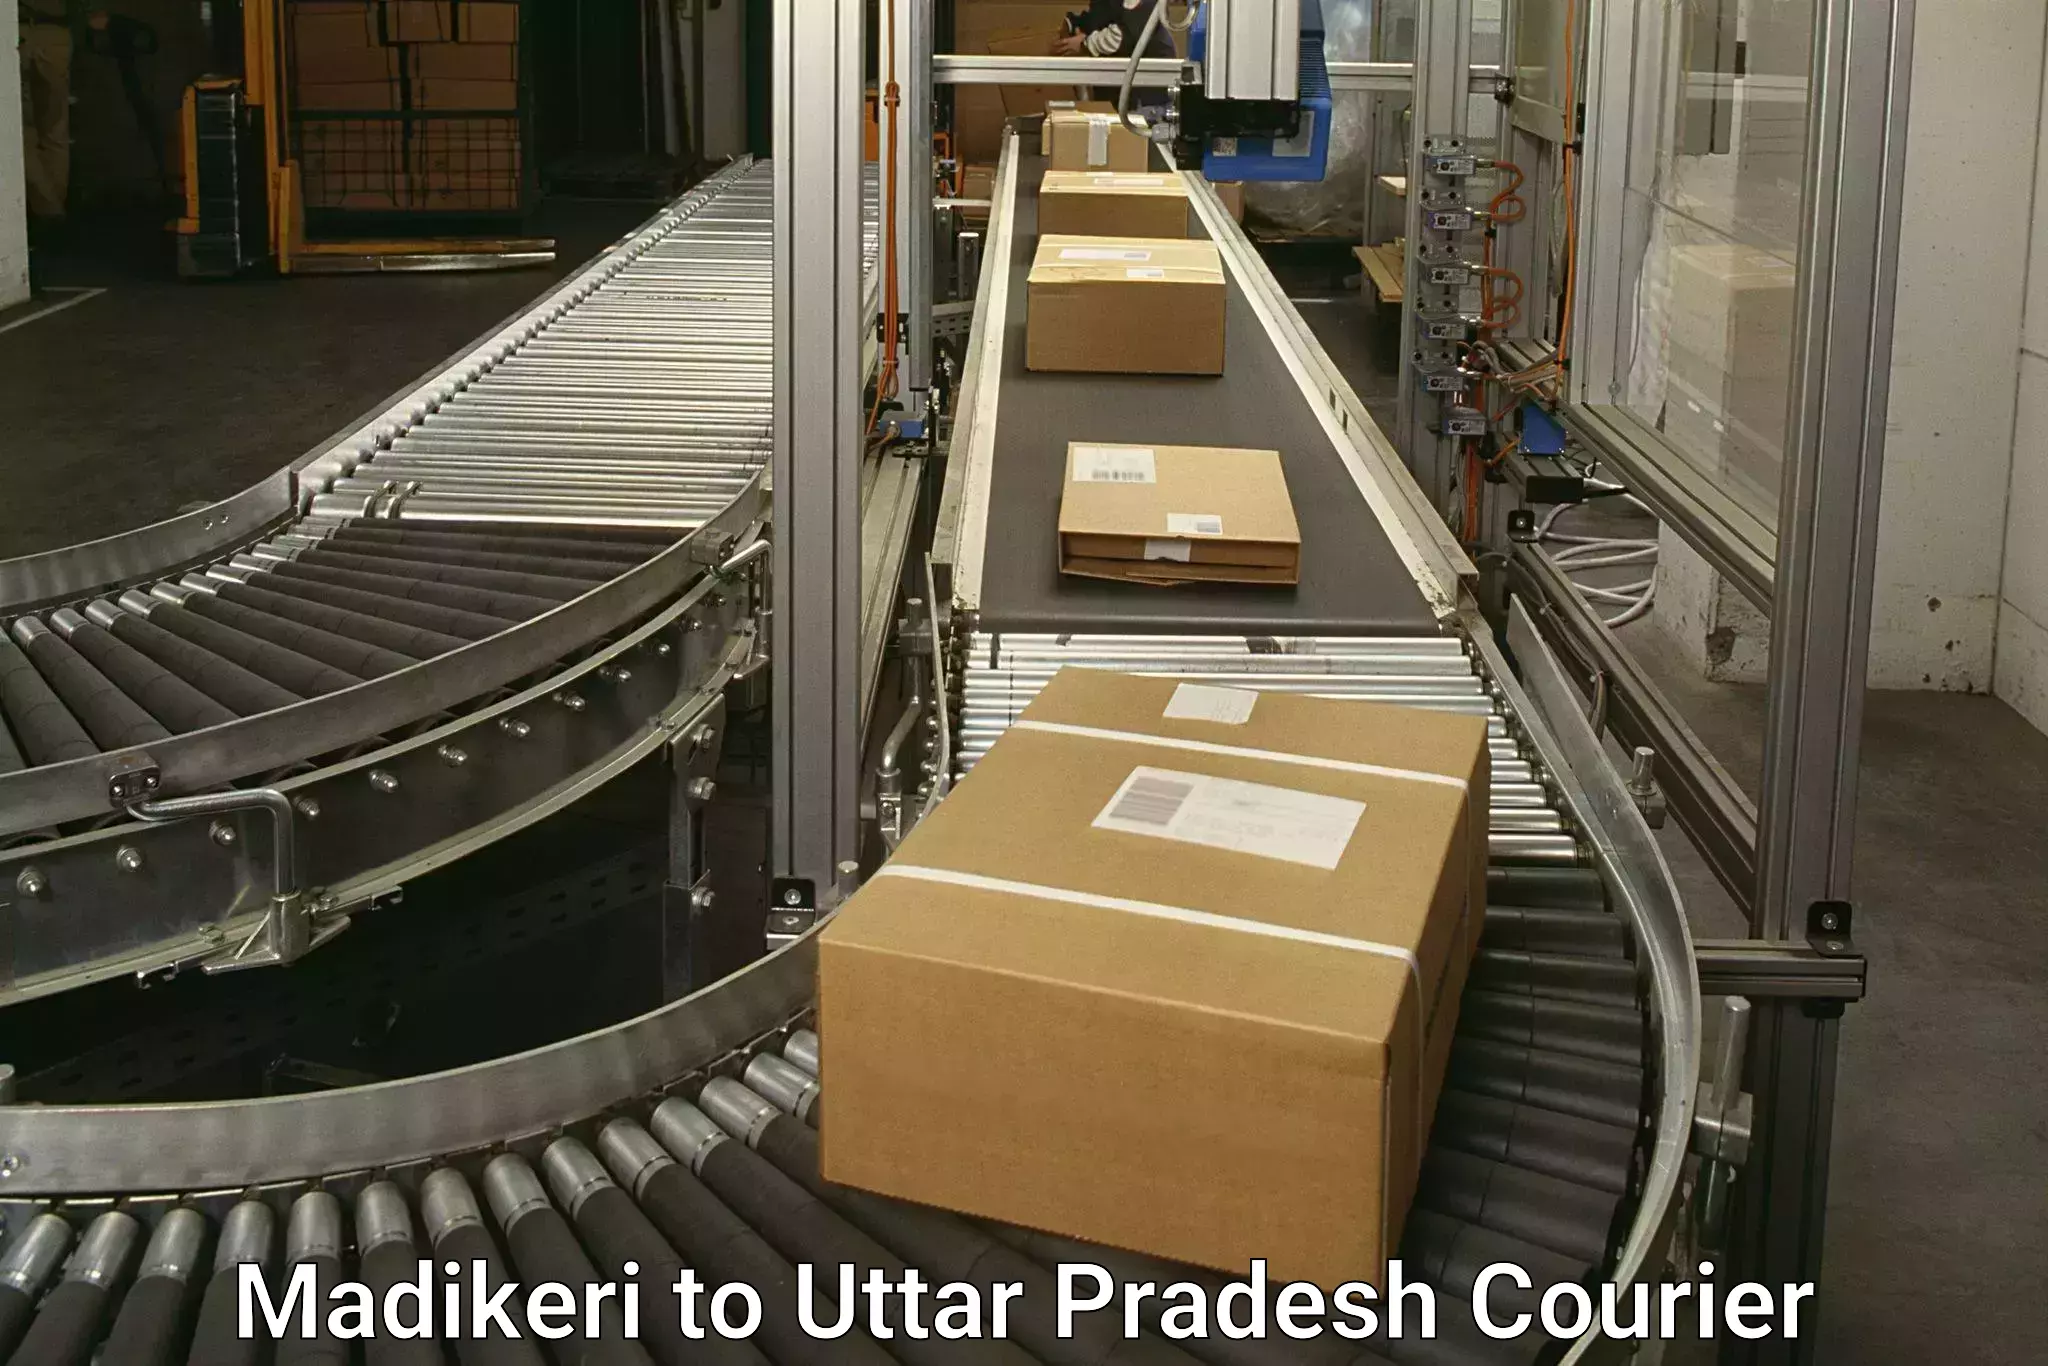 Courier service innovation Madikeri to Vrindavan